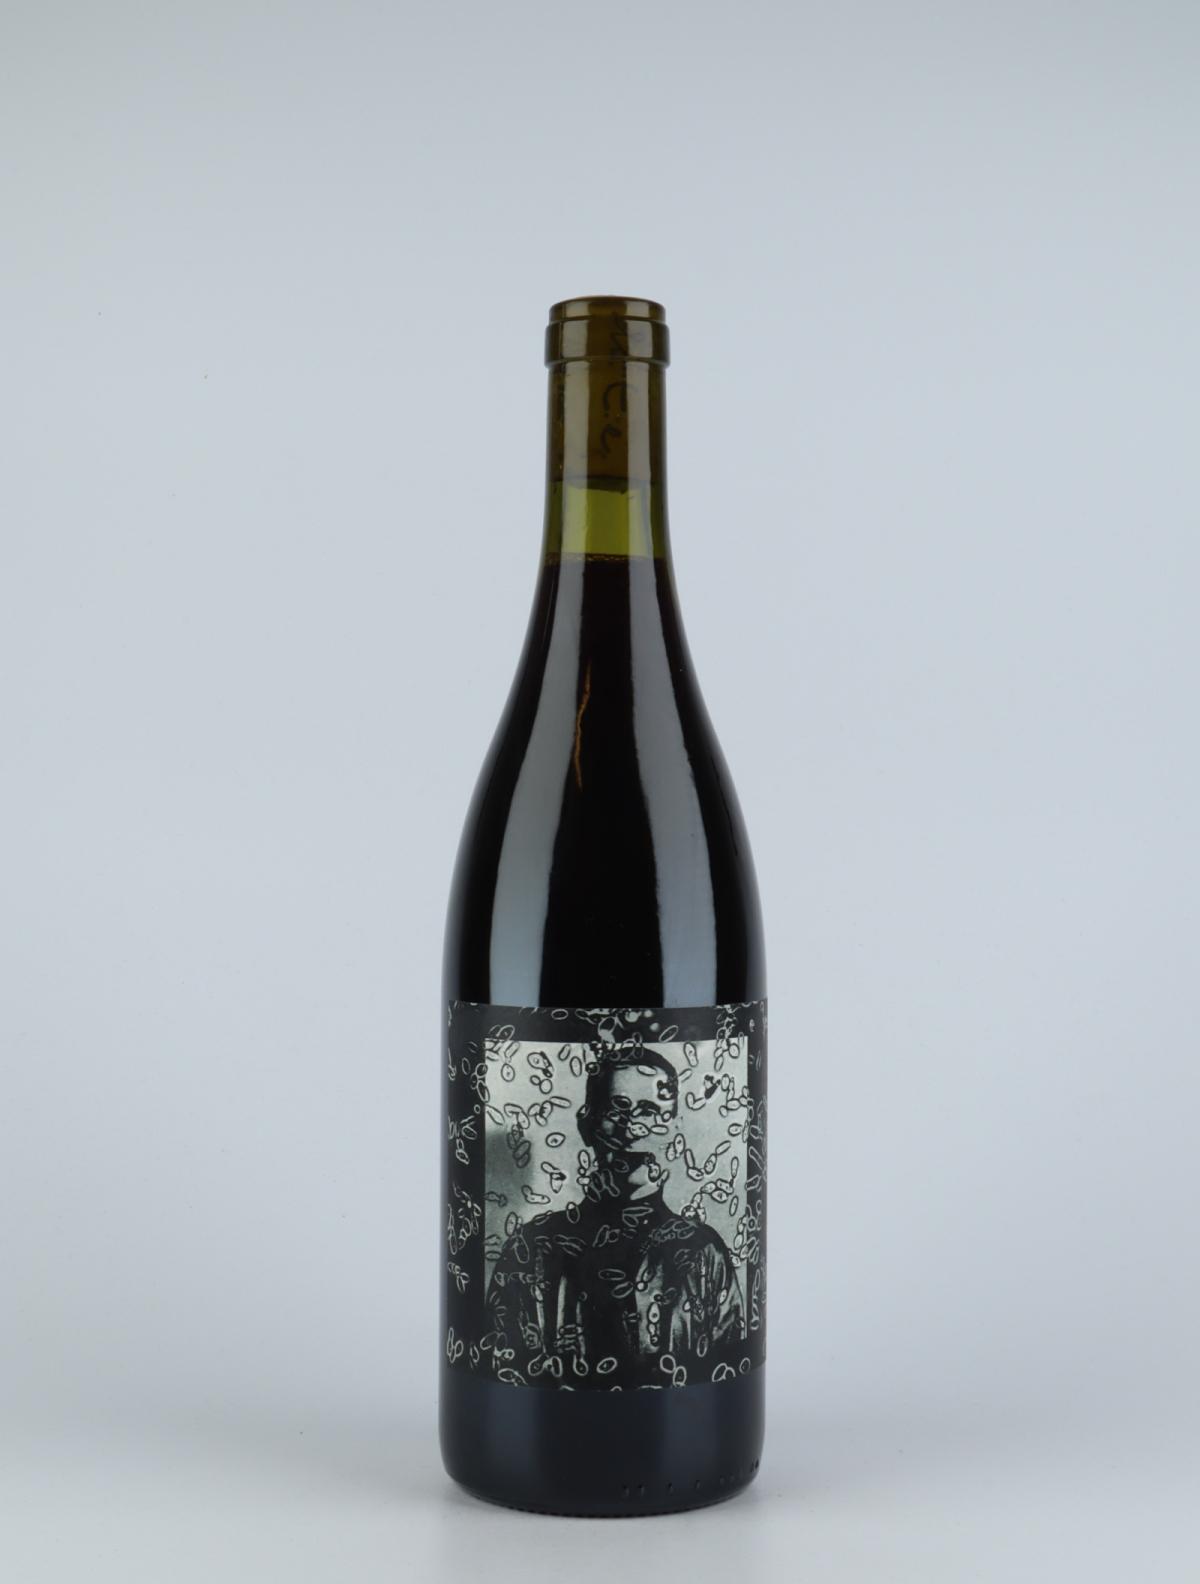 A bottle 2016 Bertolt Red wine from do.t.e Vini, Tuscany in Italy